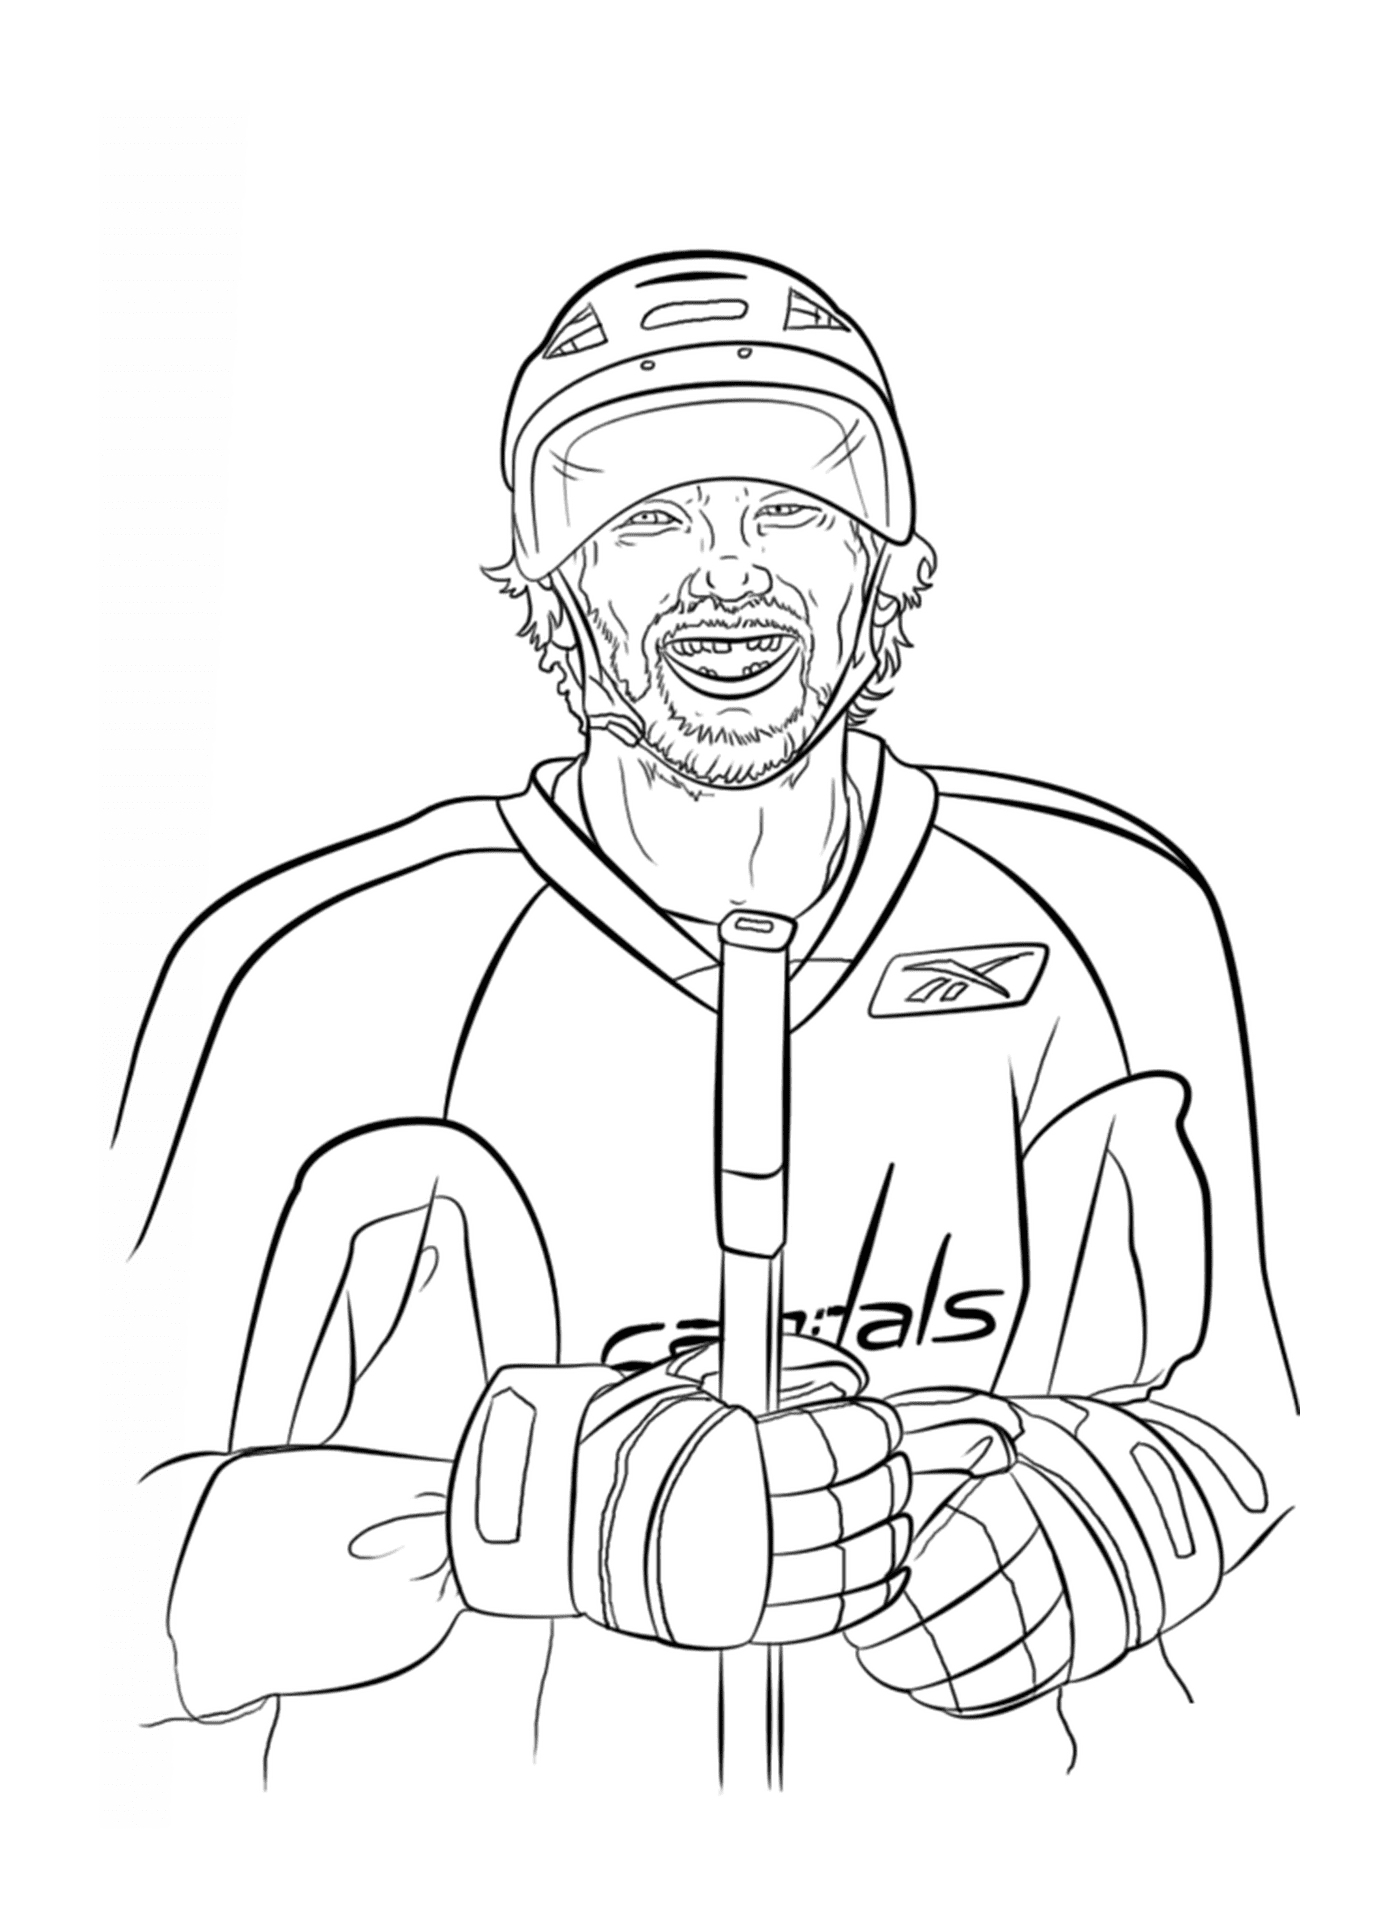  Alex Ovechkin, jugador de hockey 